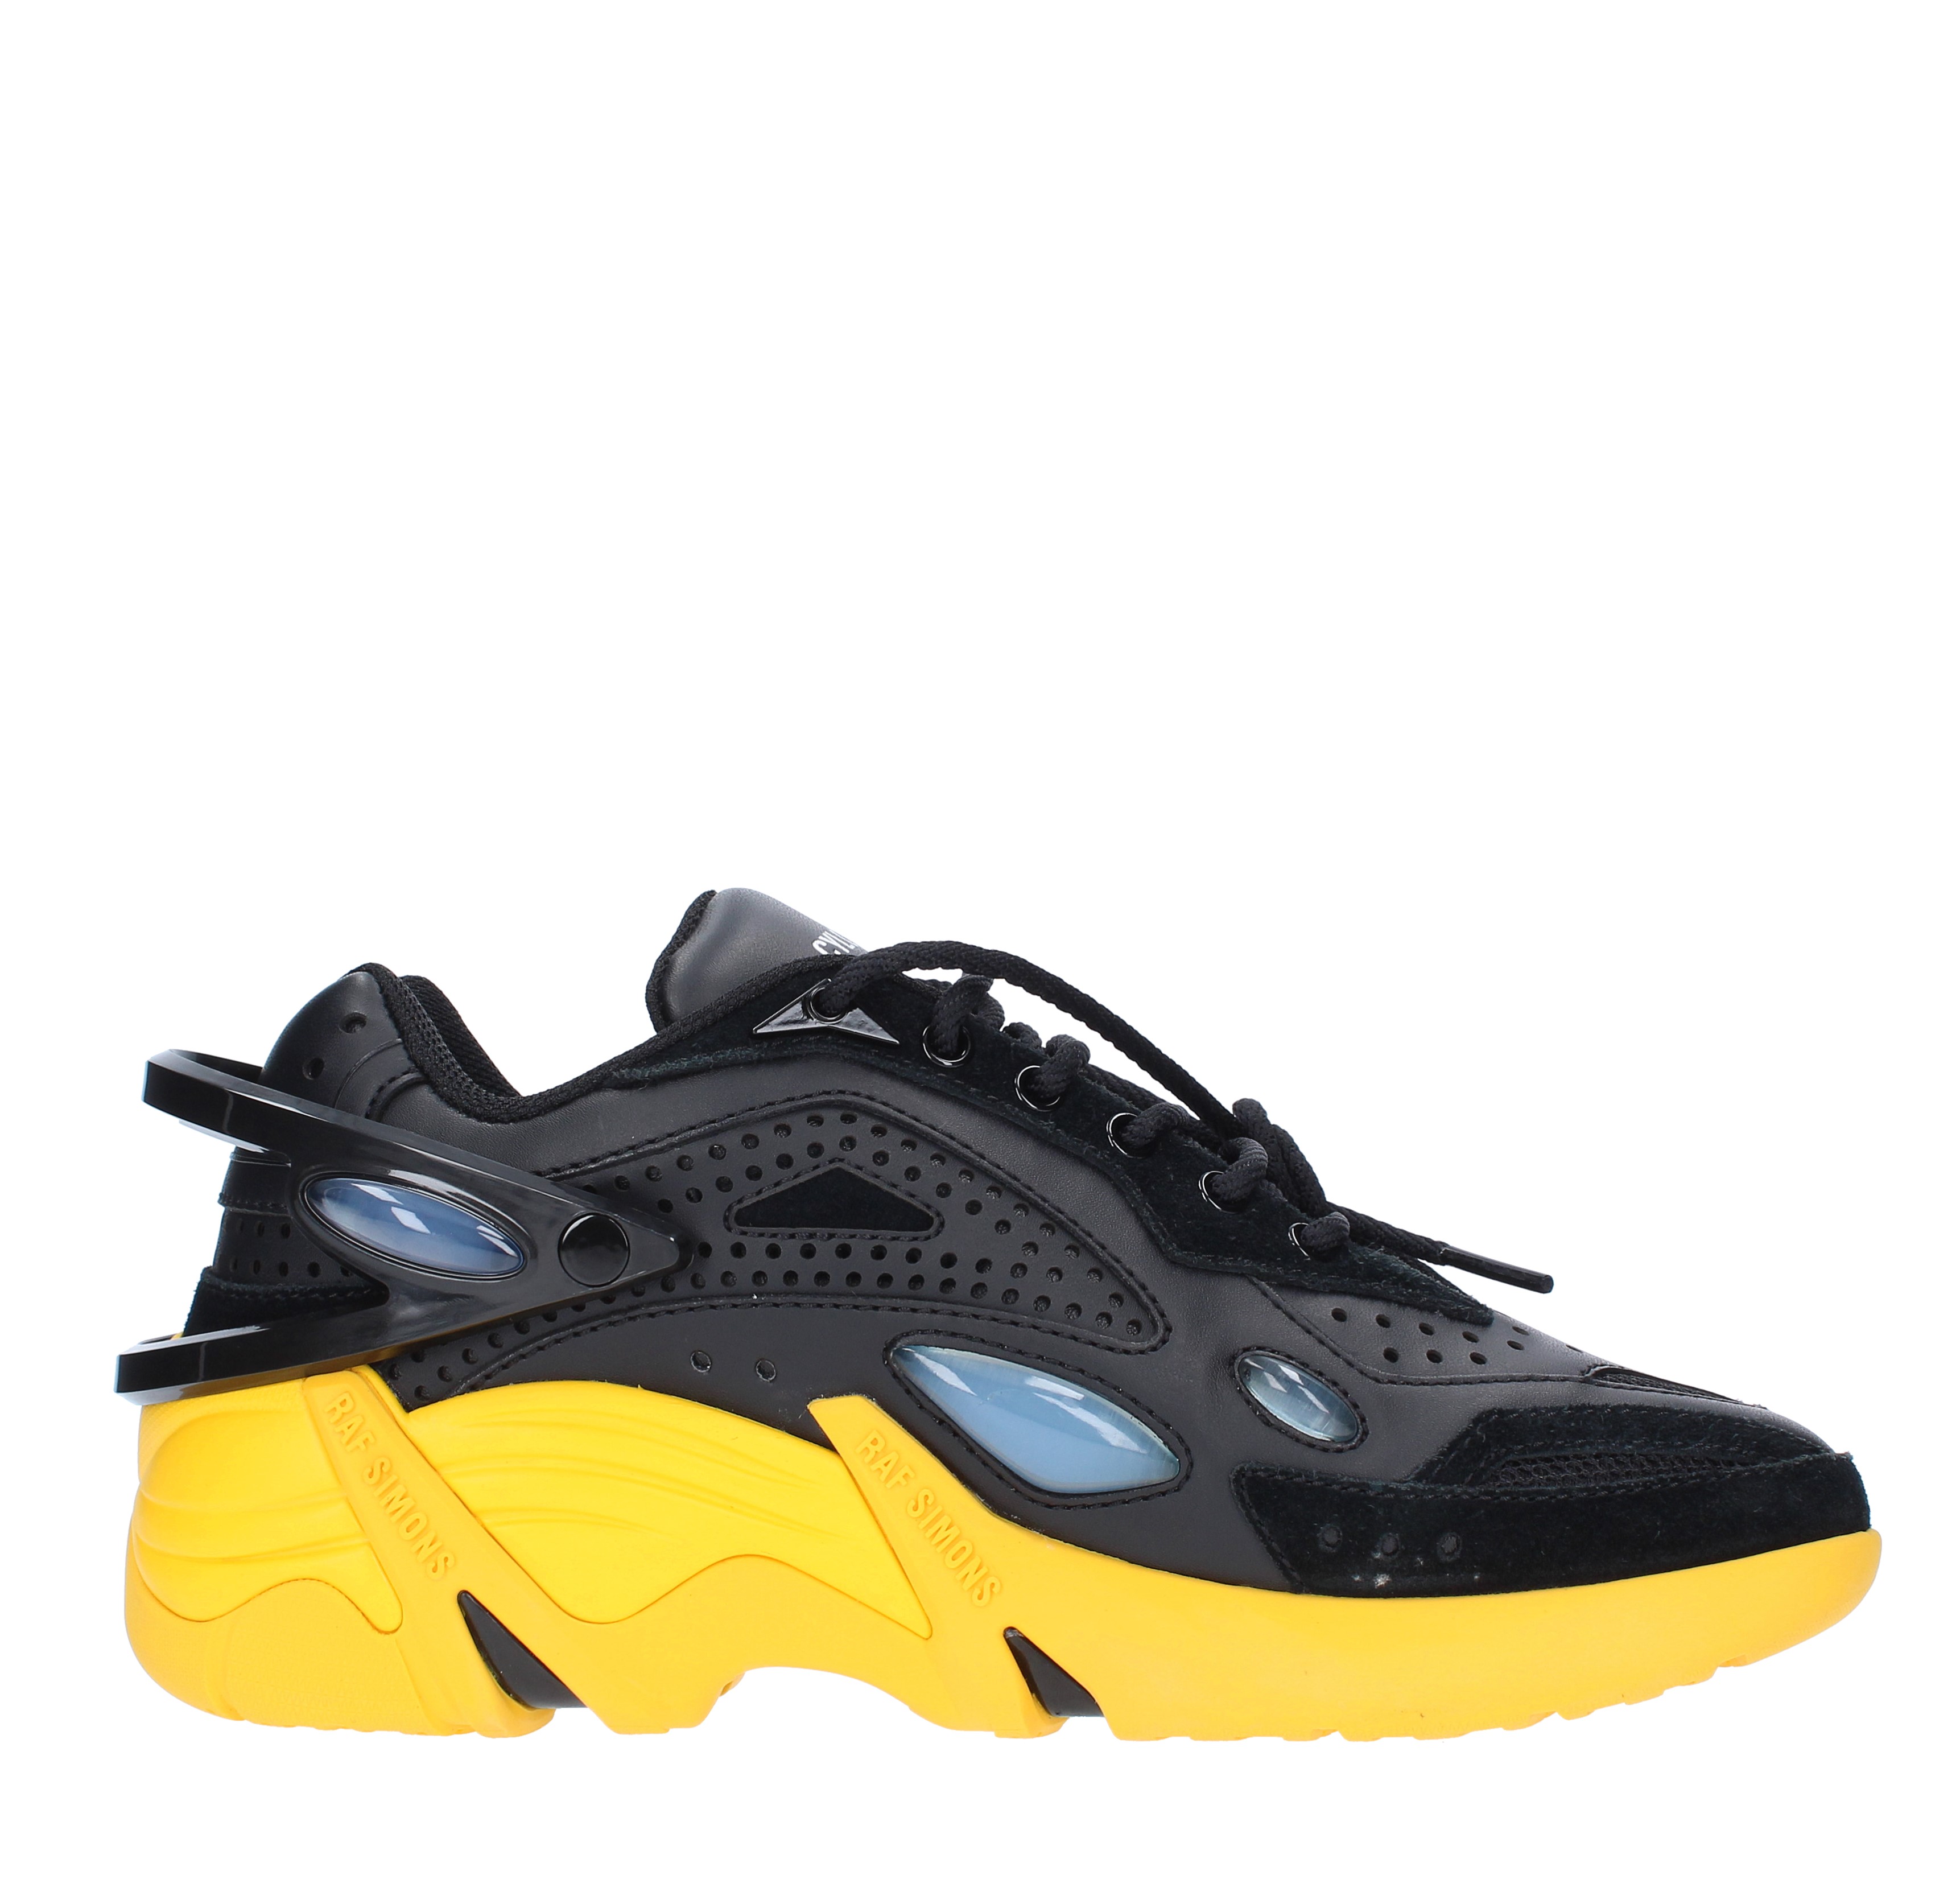 Sneakers in pelle e camoscio - RAF SIMONS - Ginevra calzature